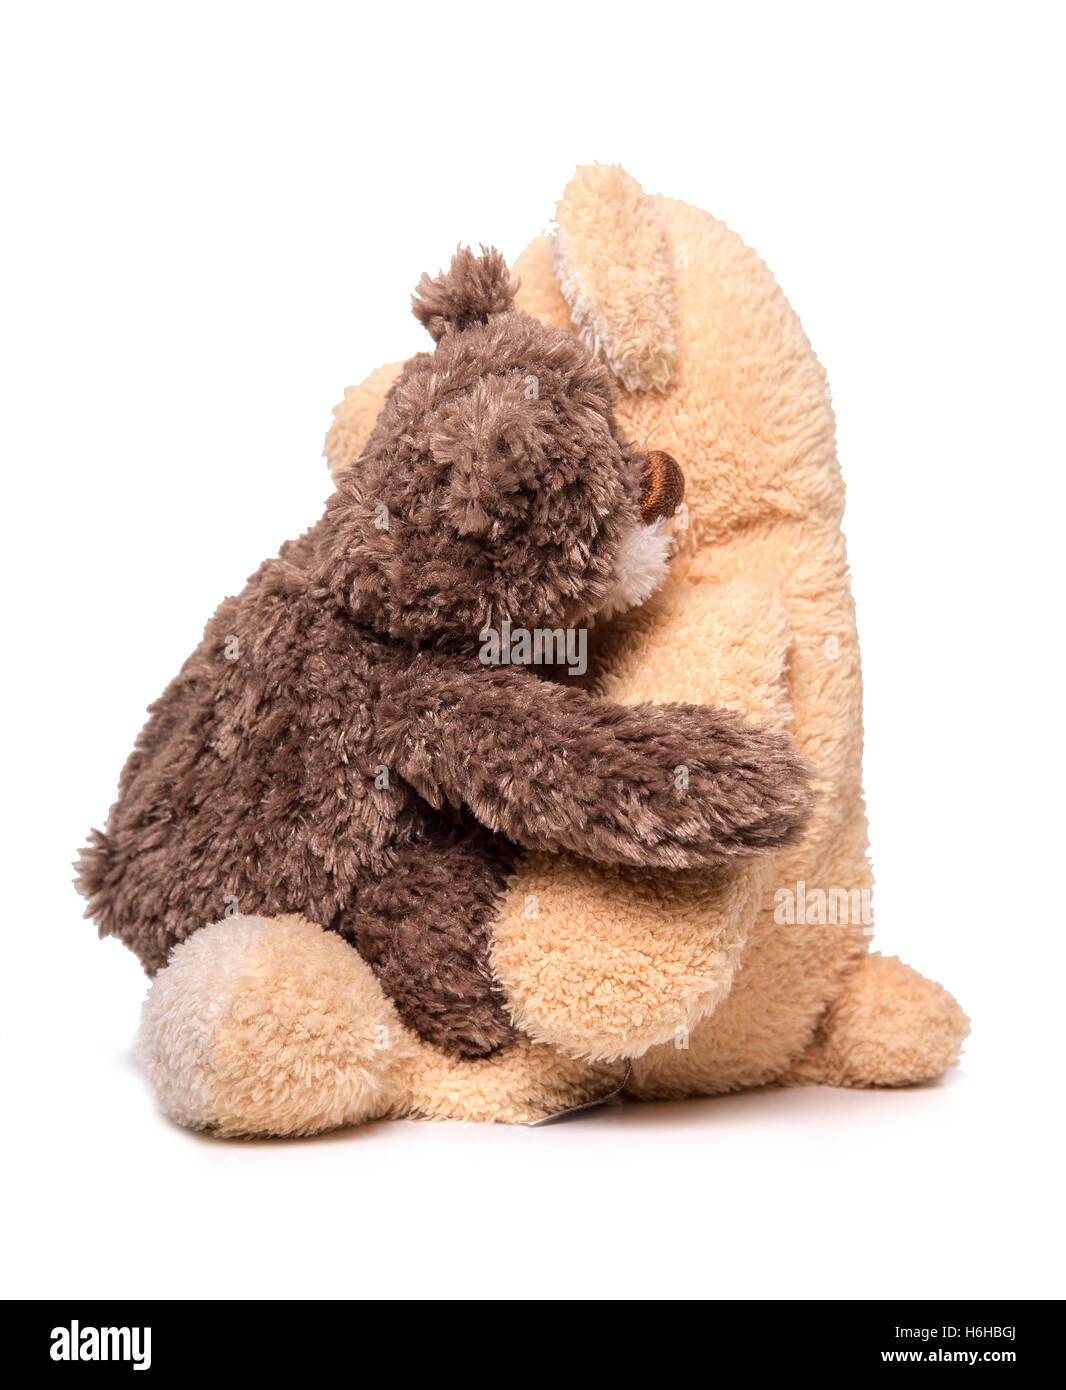 https://c8.alamy.com/comp/H6HBGJ/two-teddy-bears-hugging-H6HBGJ.jpg